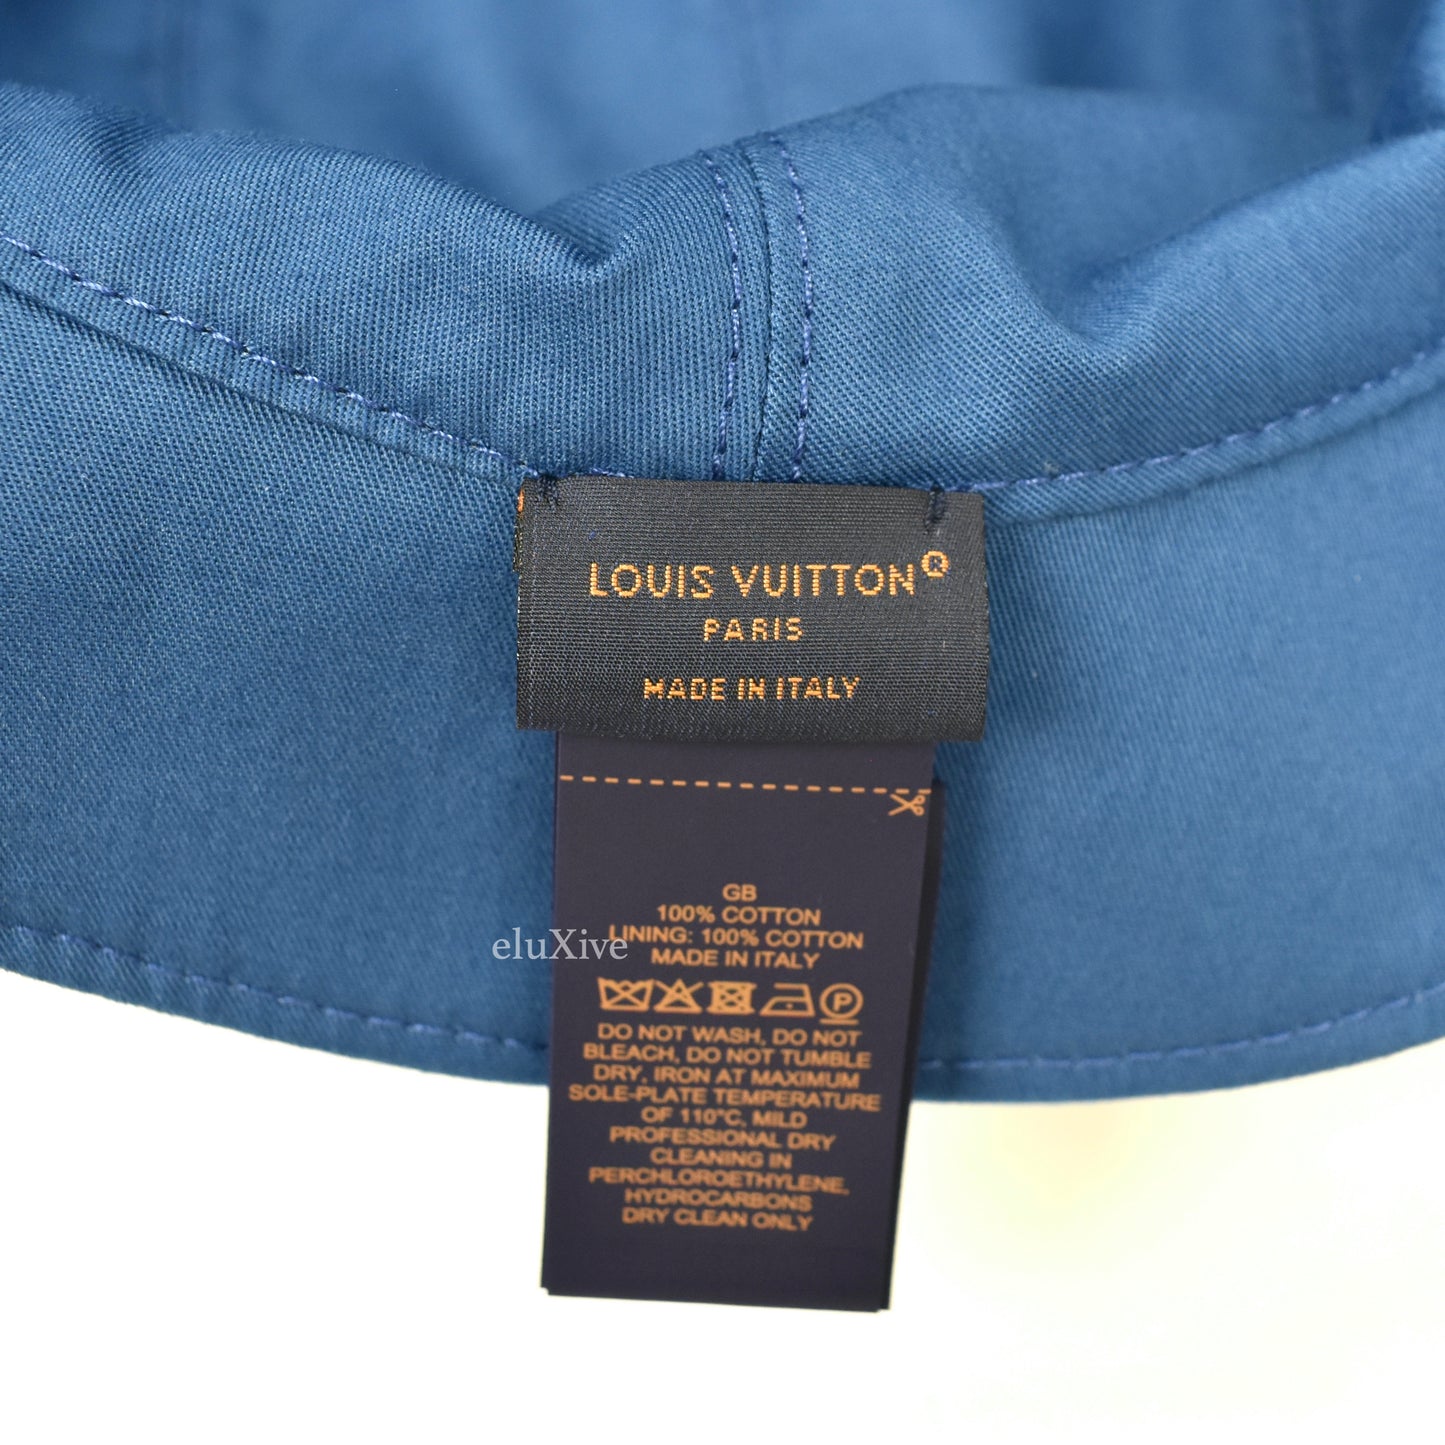 Louis Vuitton - Navy Blue Monogram Denim Hat – eluXive